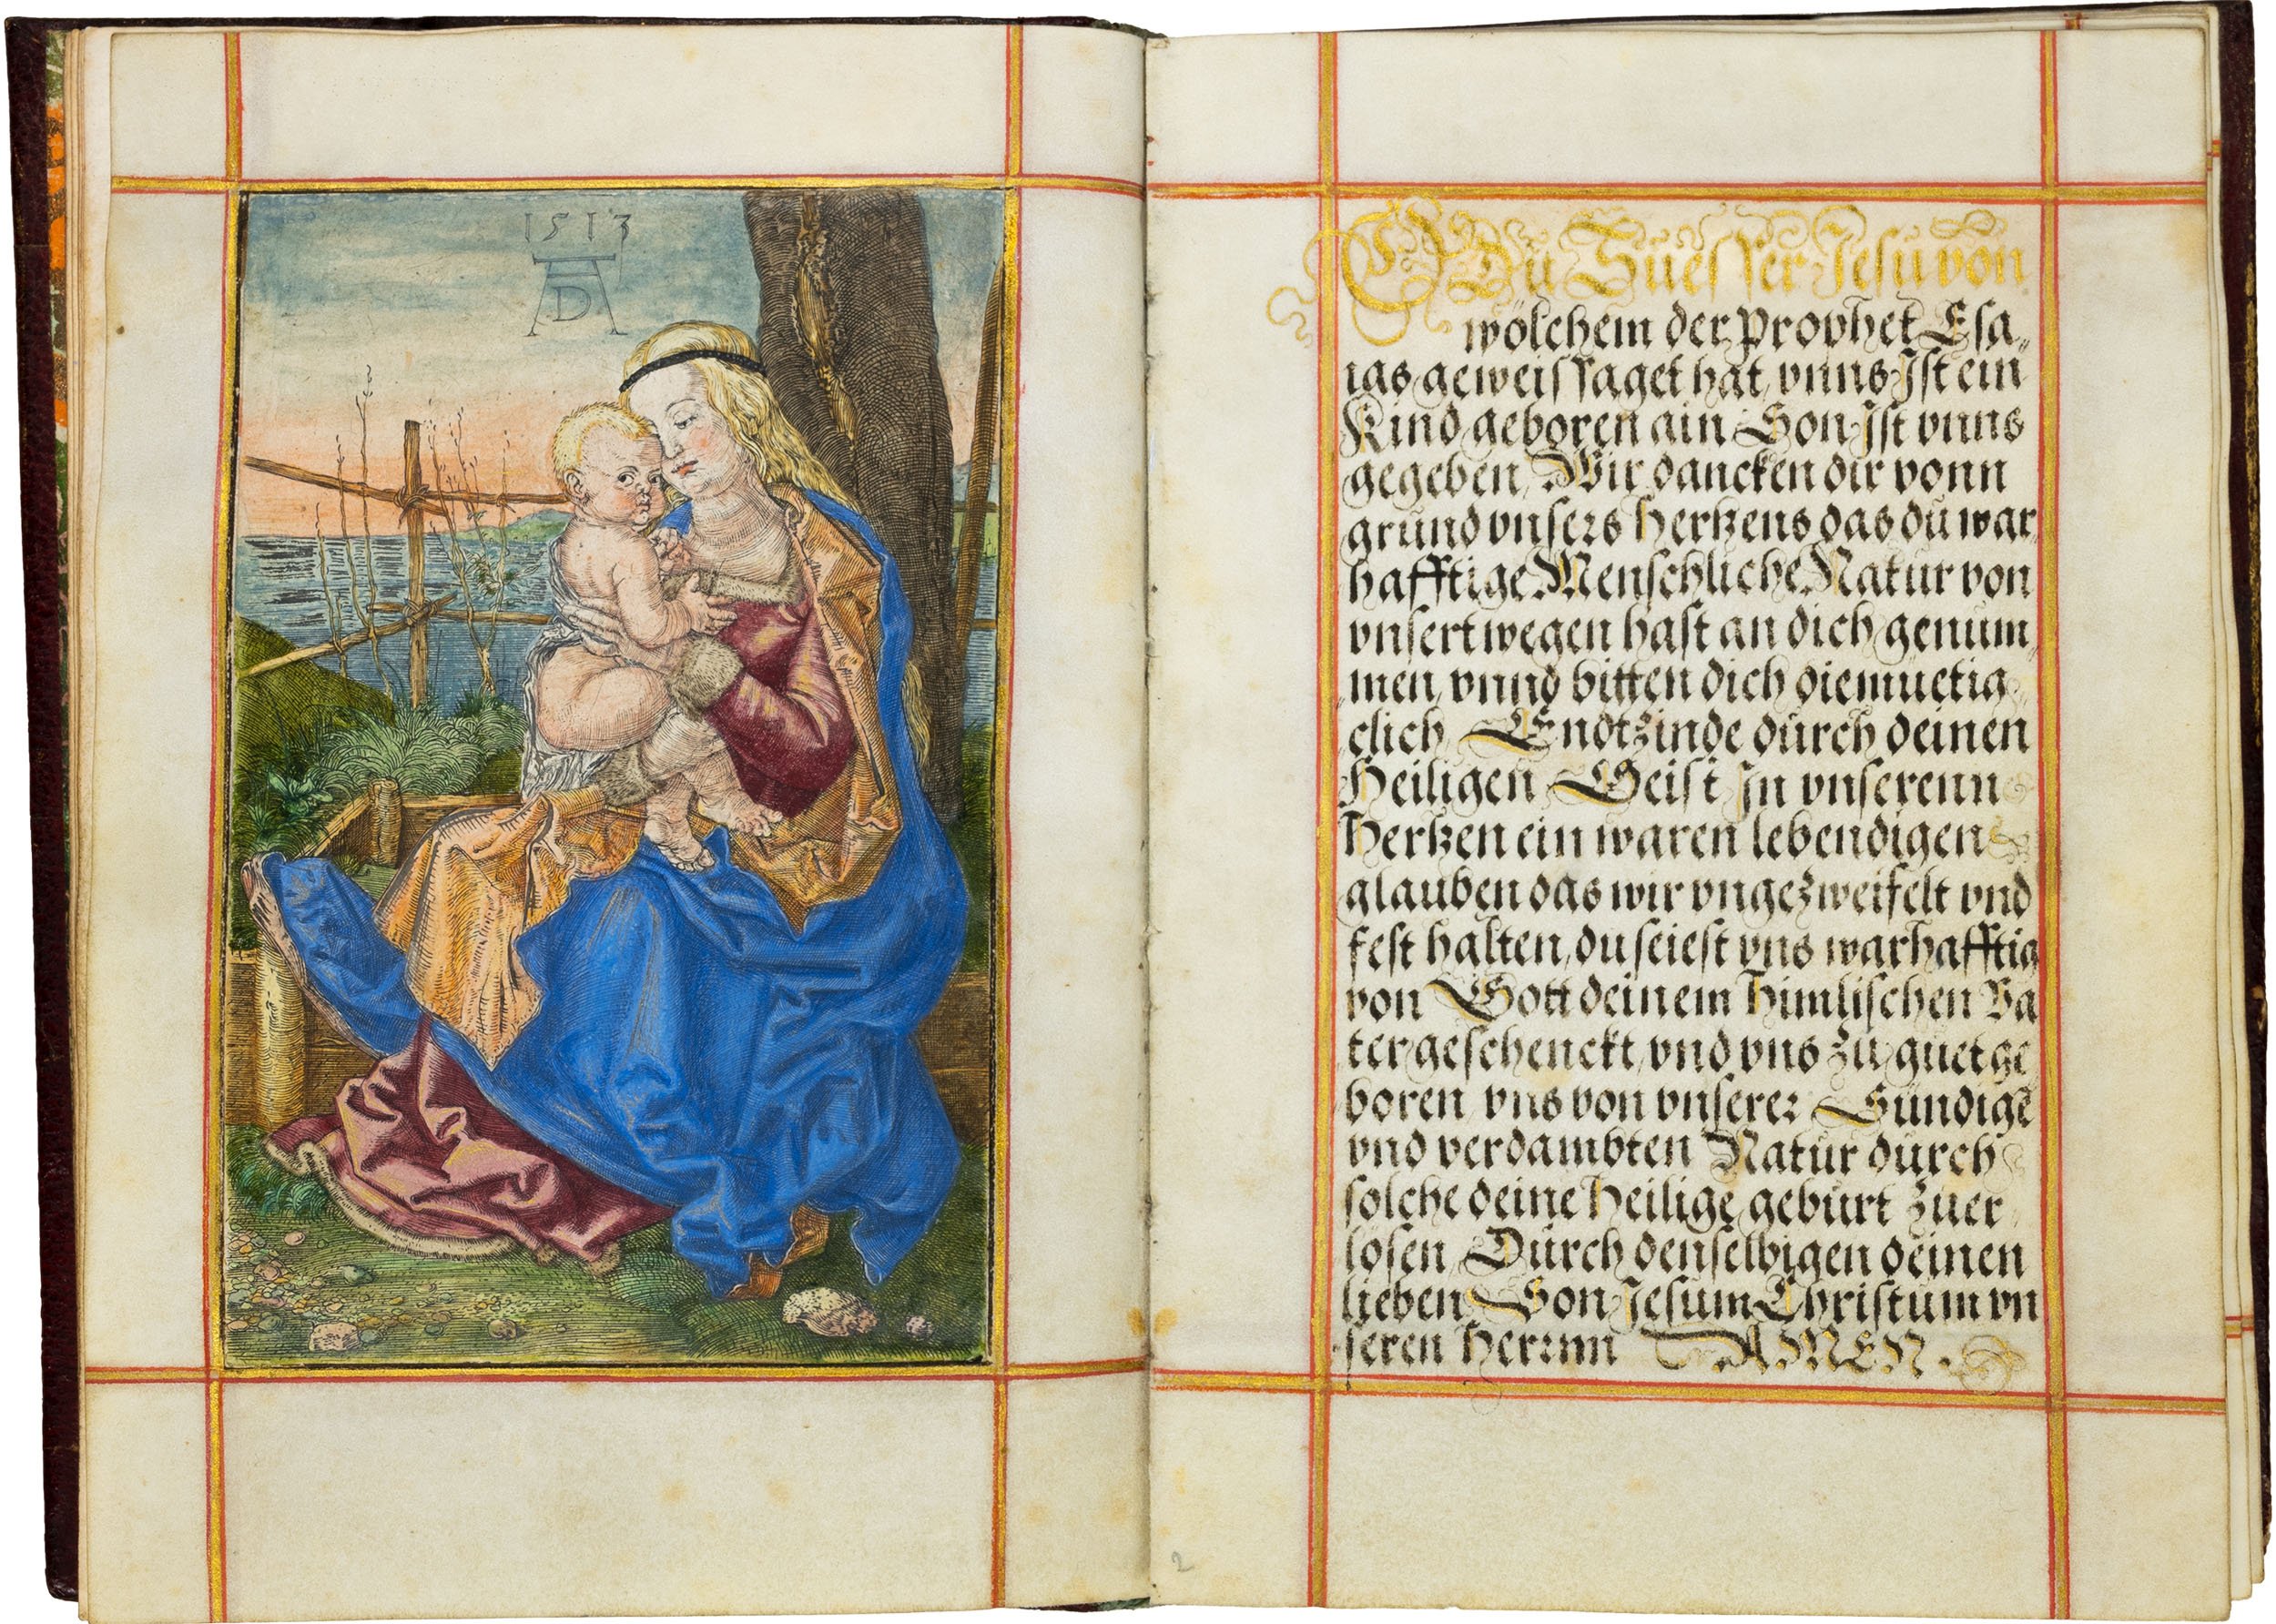 duerer-engraved-passion-kupferstich-passion-oertl-german-manuscript-vellum-1587-illuminated-4.jpg